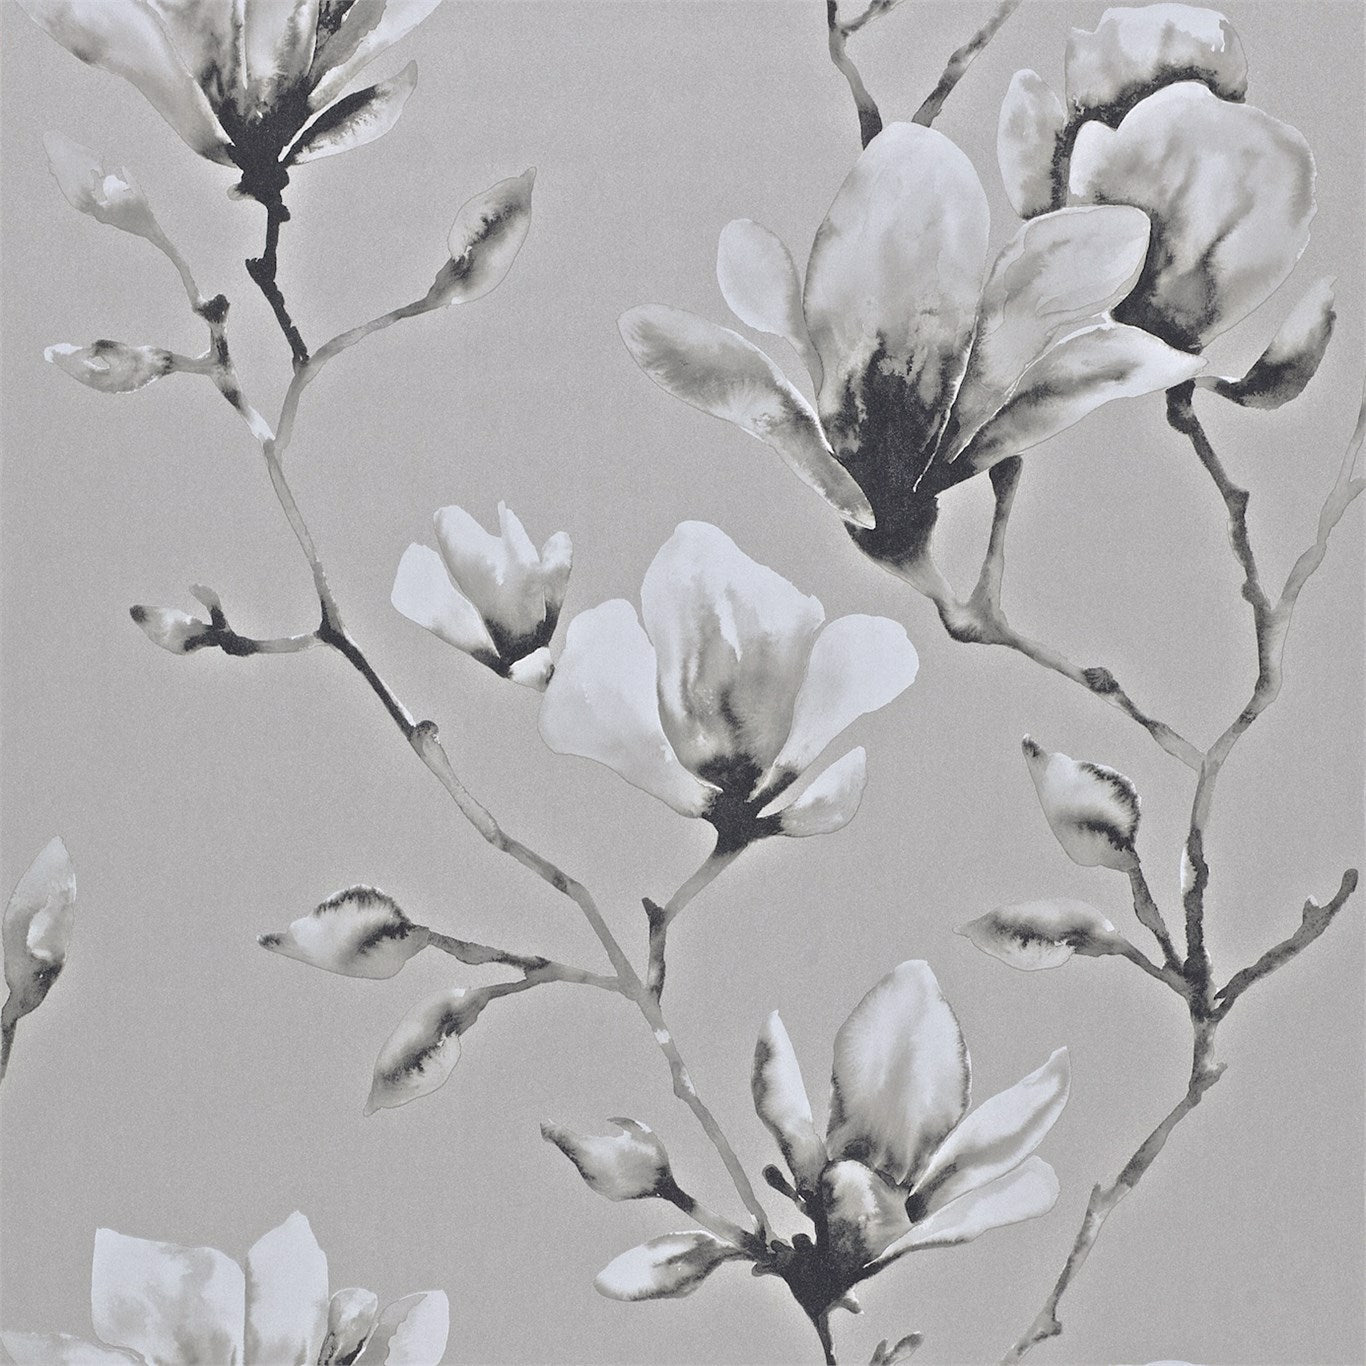 Lotus Wallpaper by Harlequin